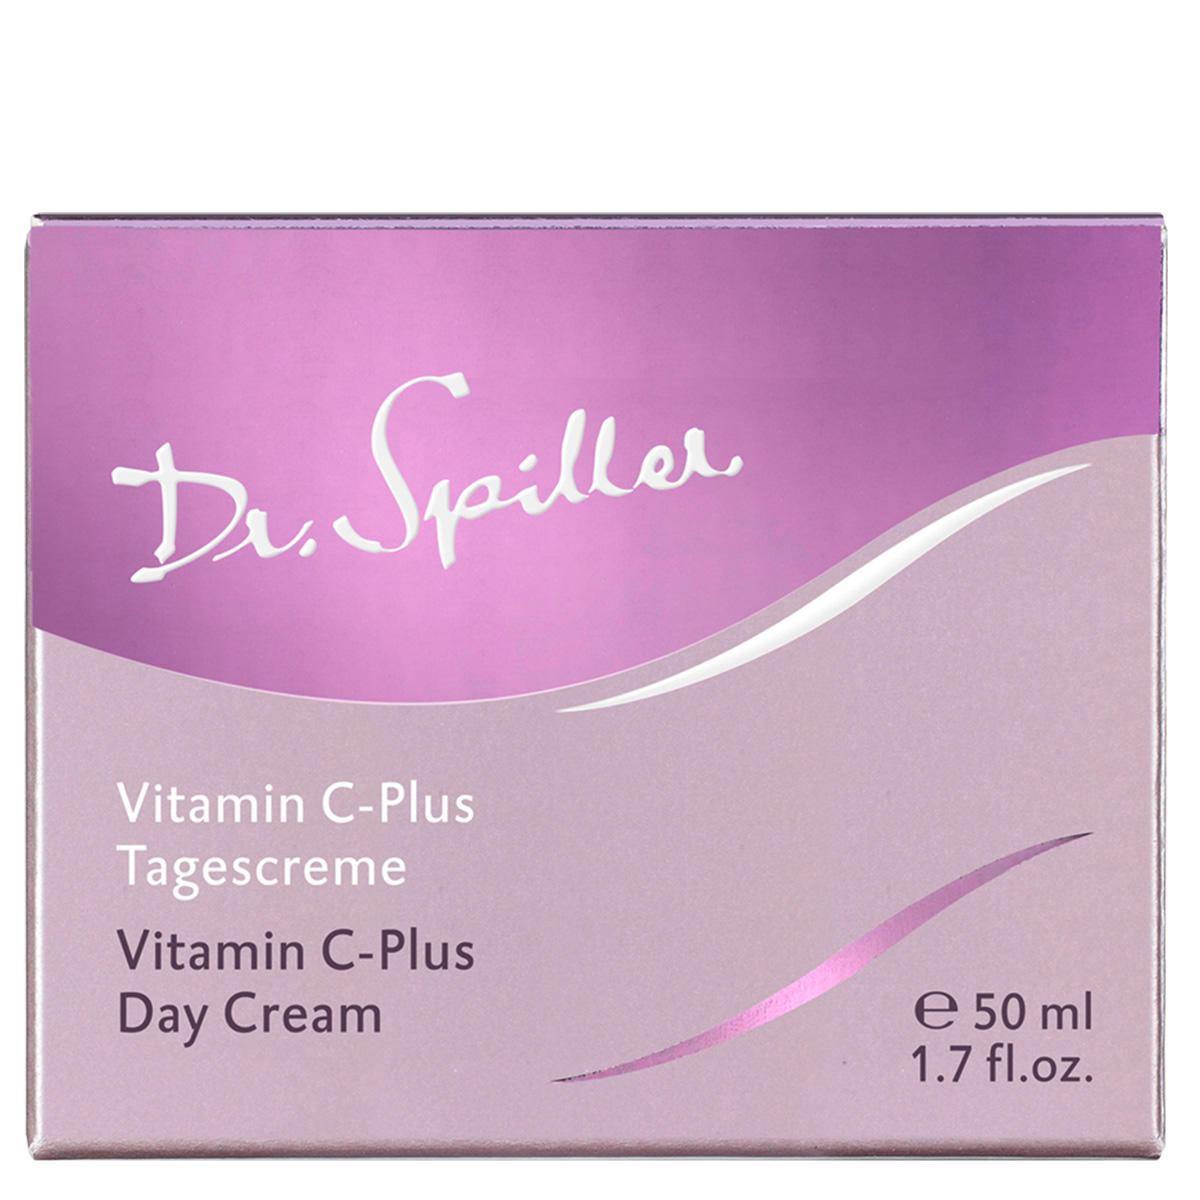 Dr. Spiller Biomimetic SkinCare Vitamin C-Plus Tagescreme 50 ml - 3